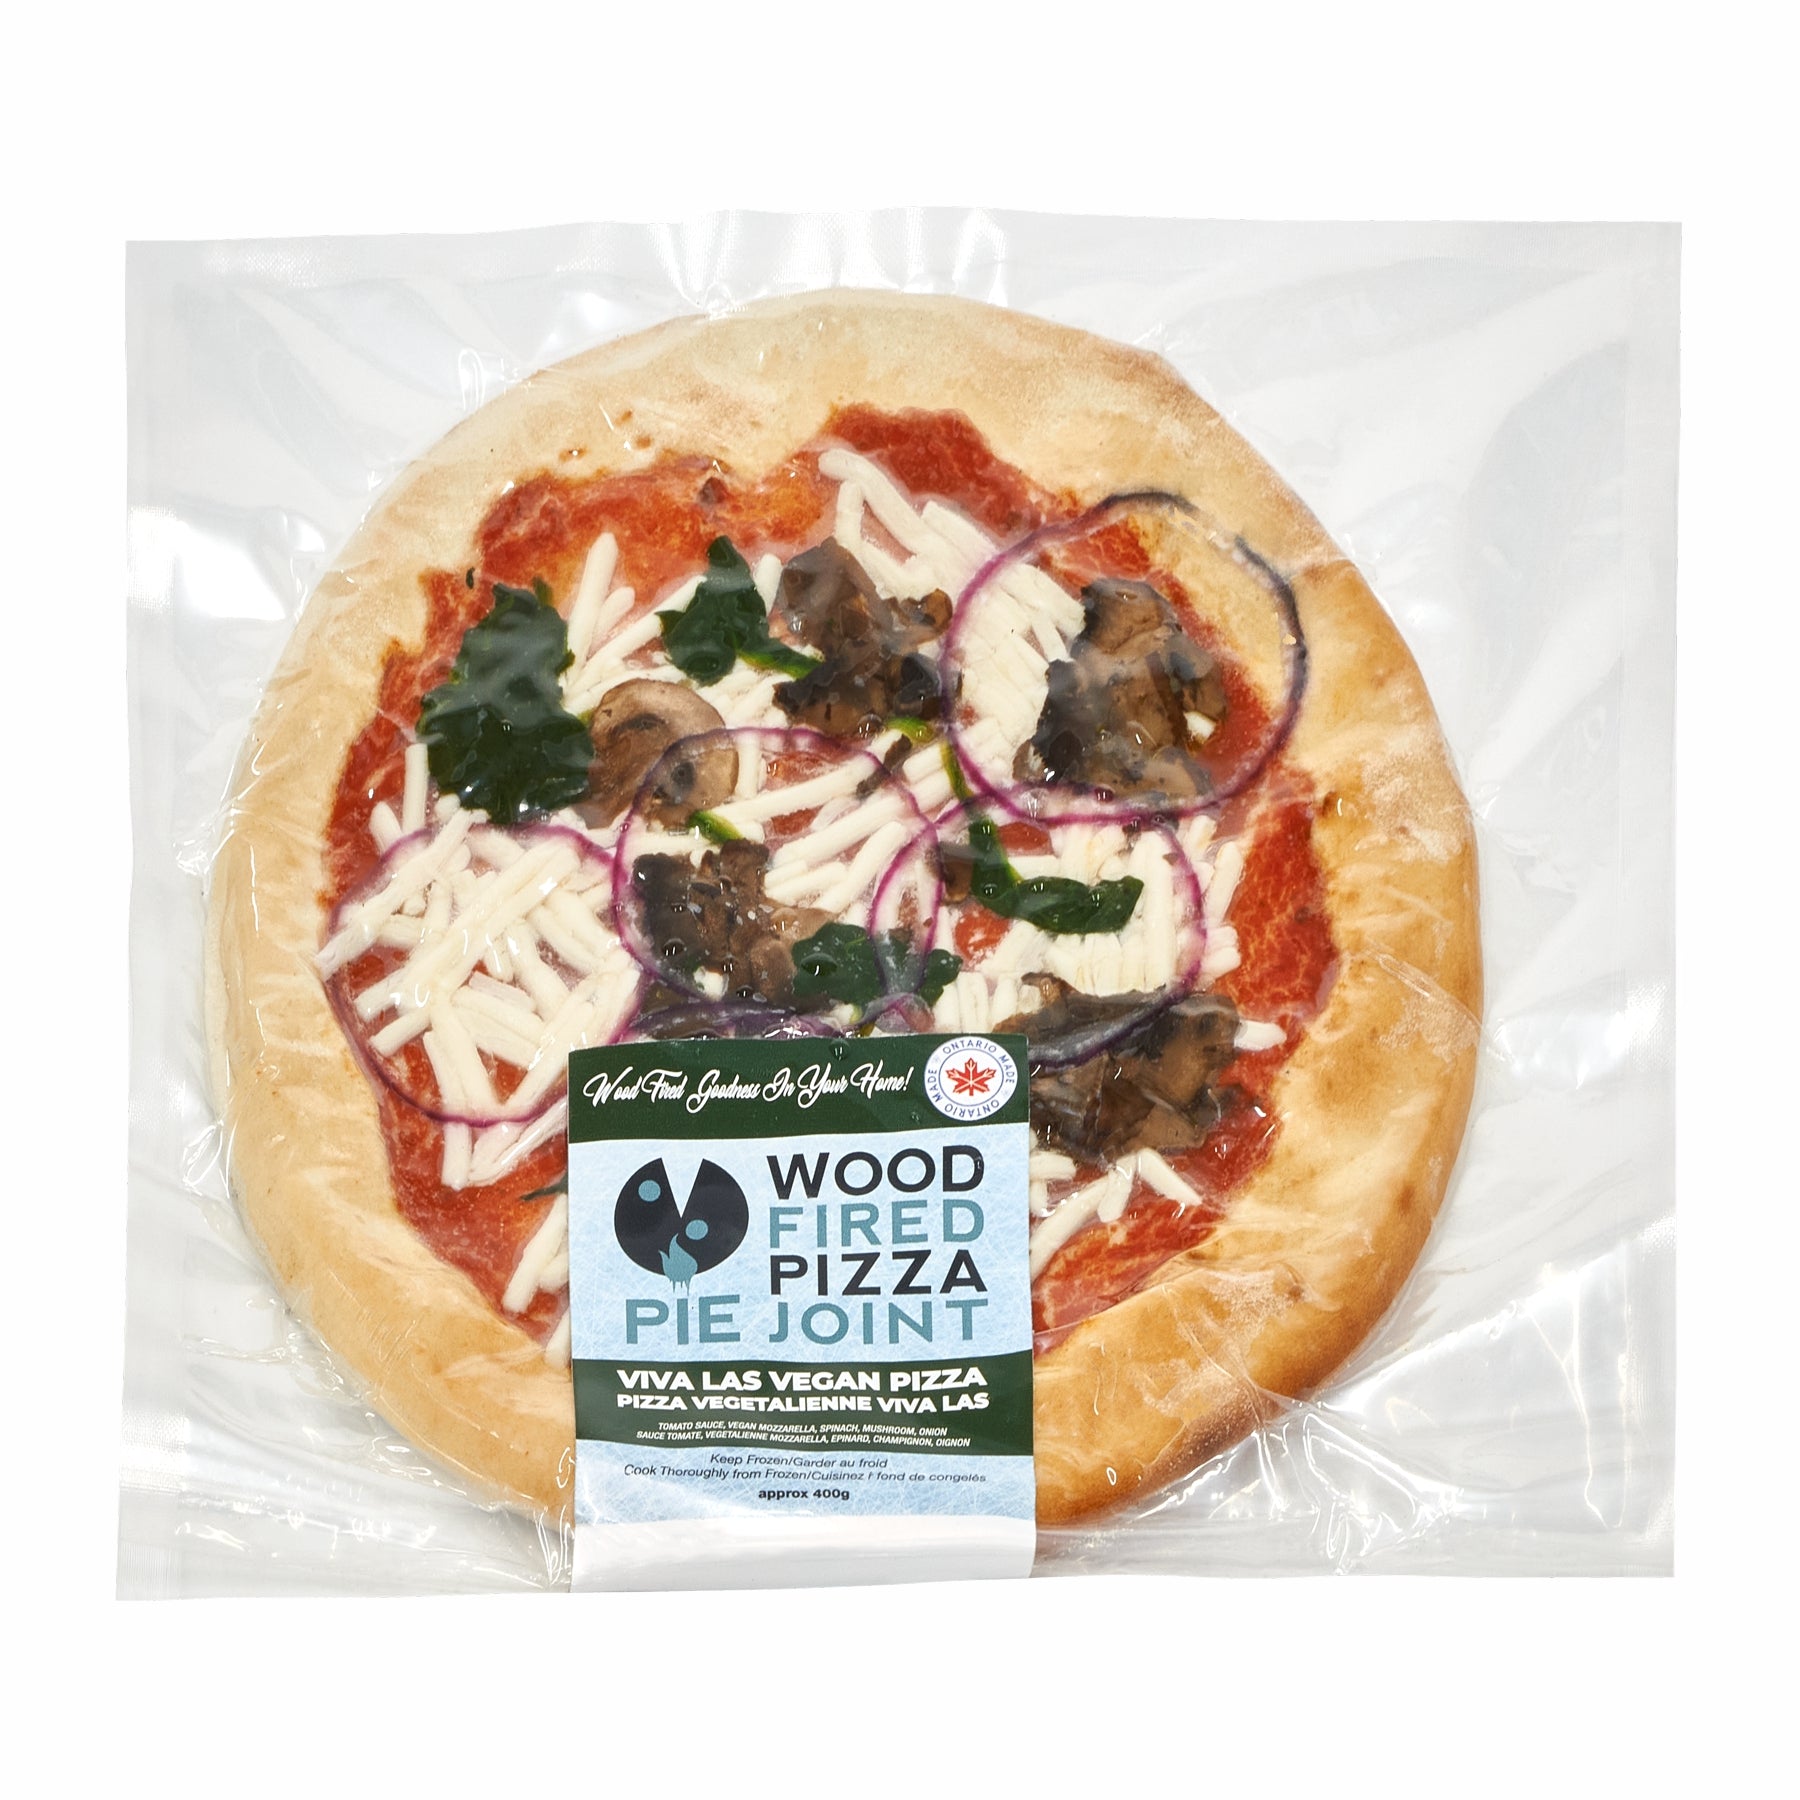 Piewood Pizza - Viva Las Vegan